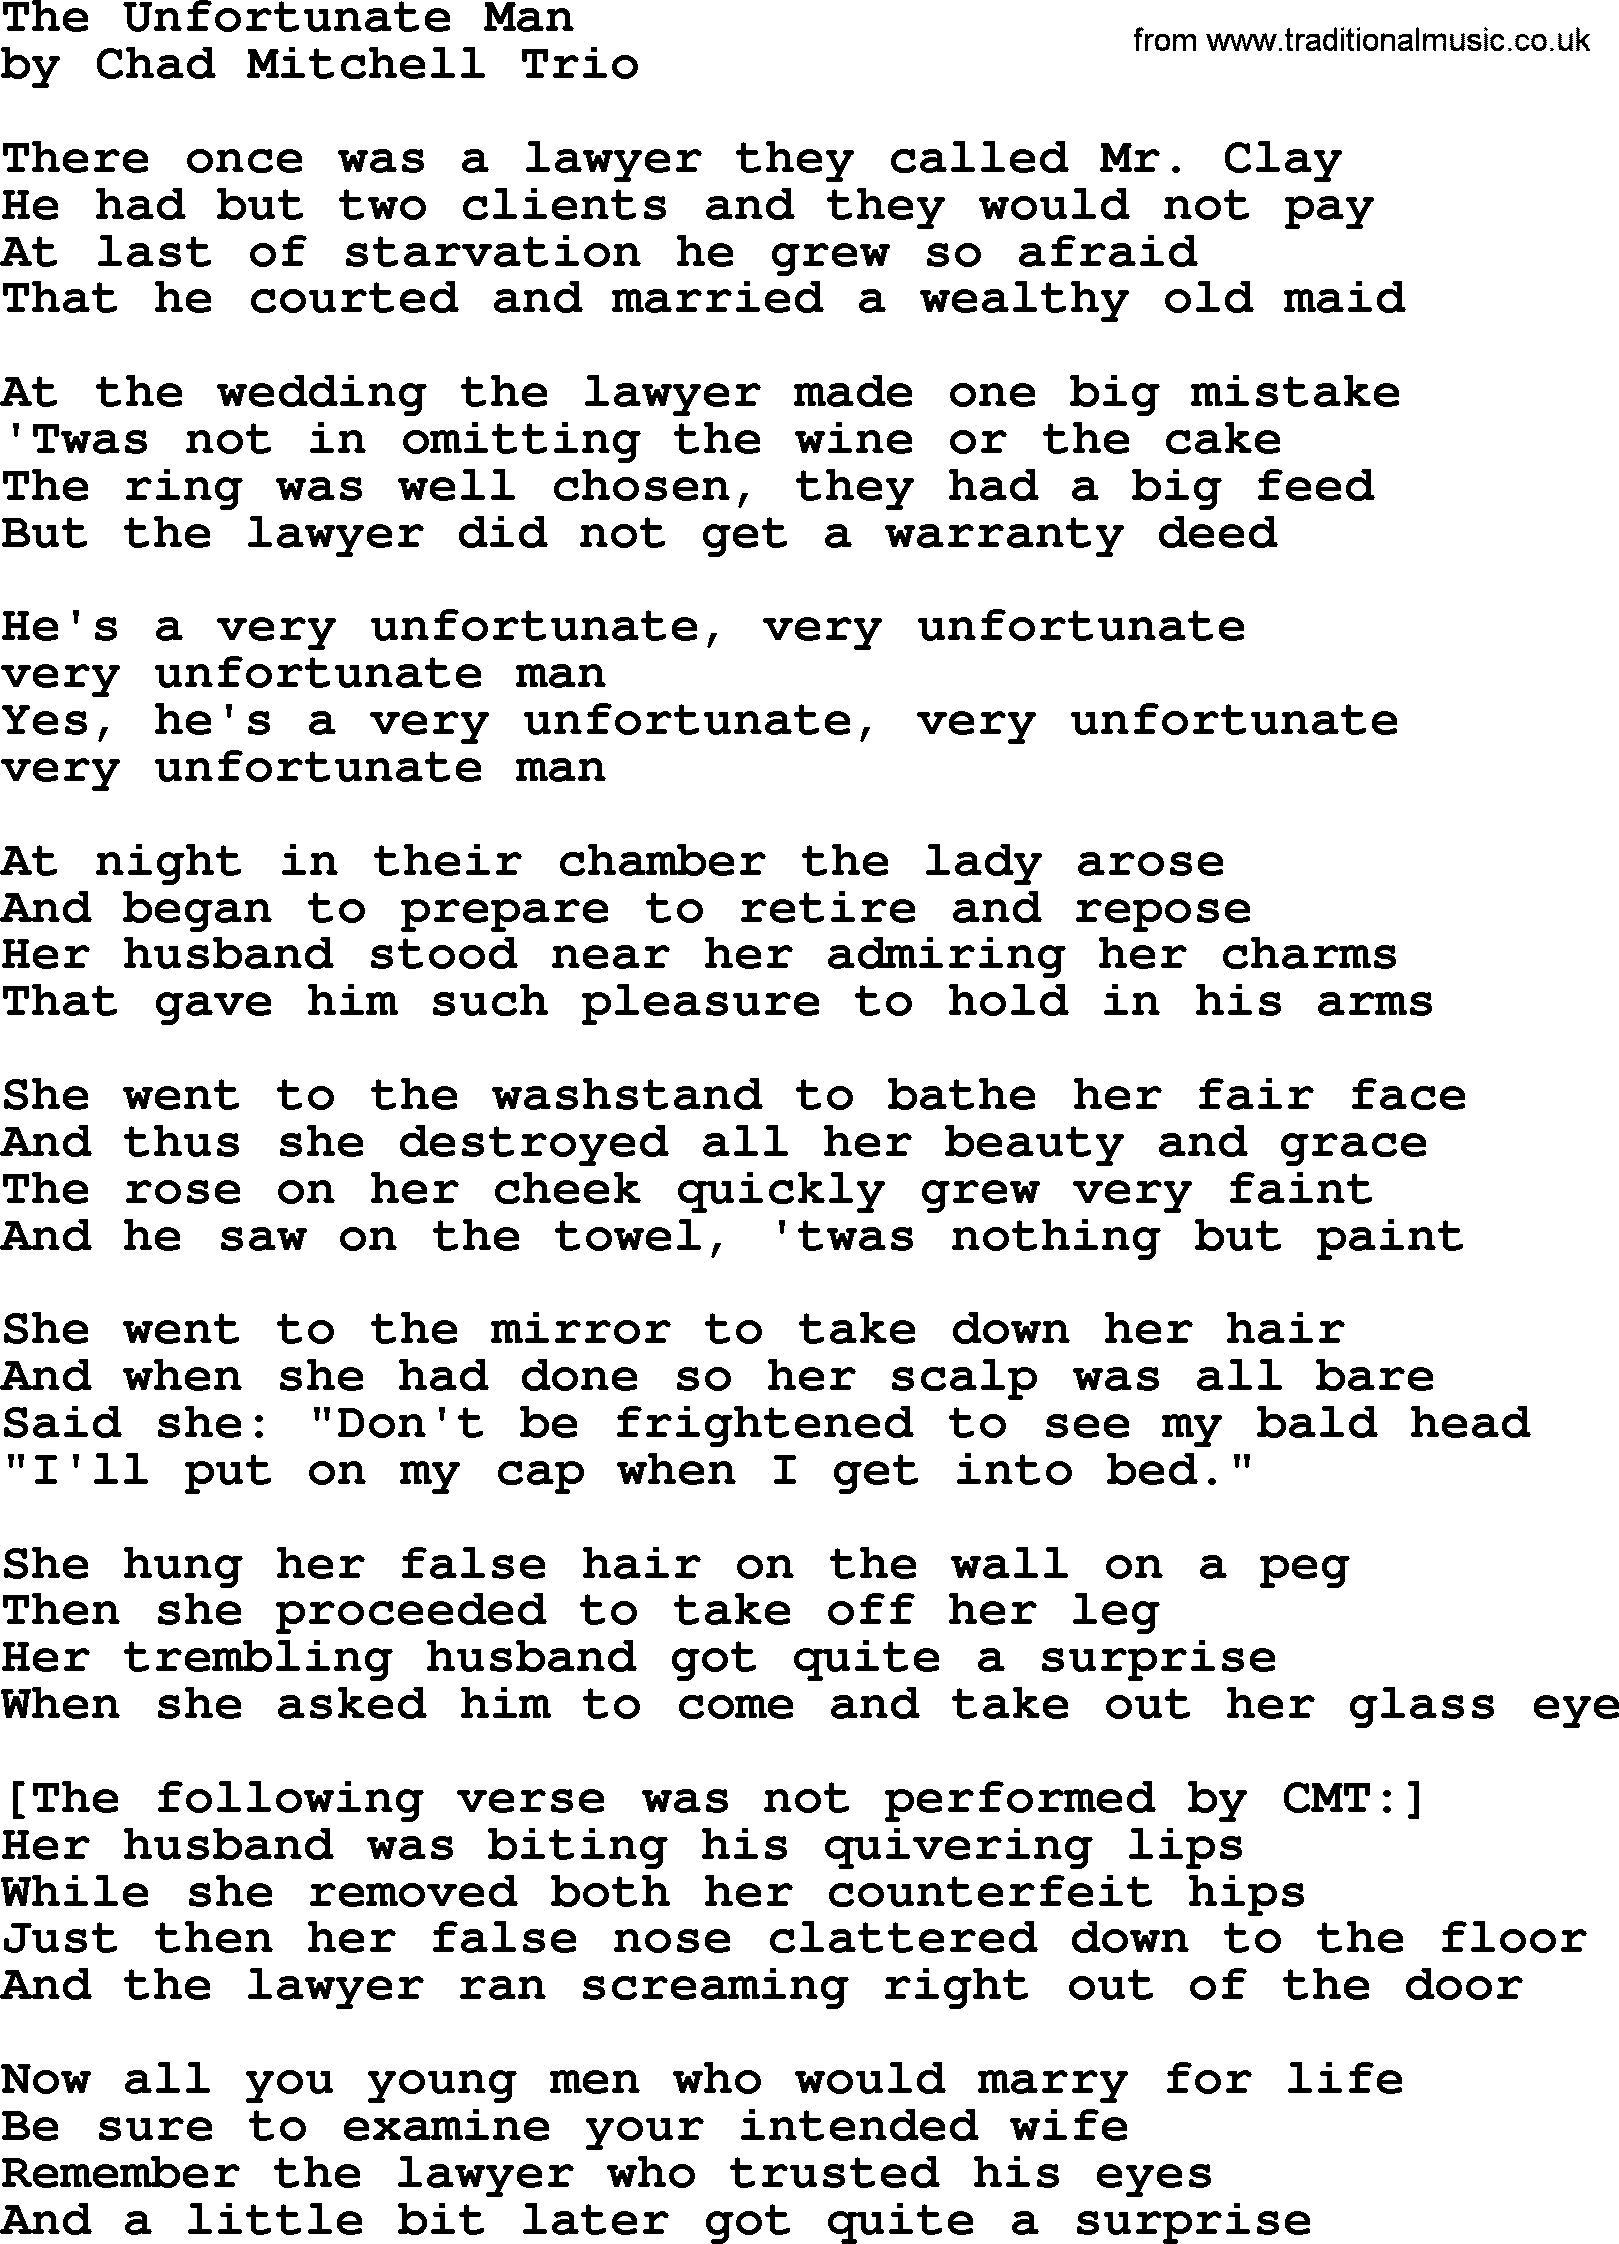 The Byrds song The Unfortunate Man, lyrics